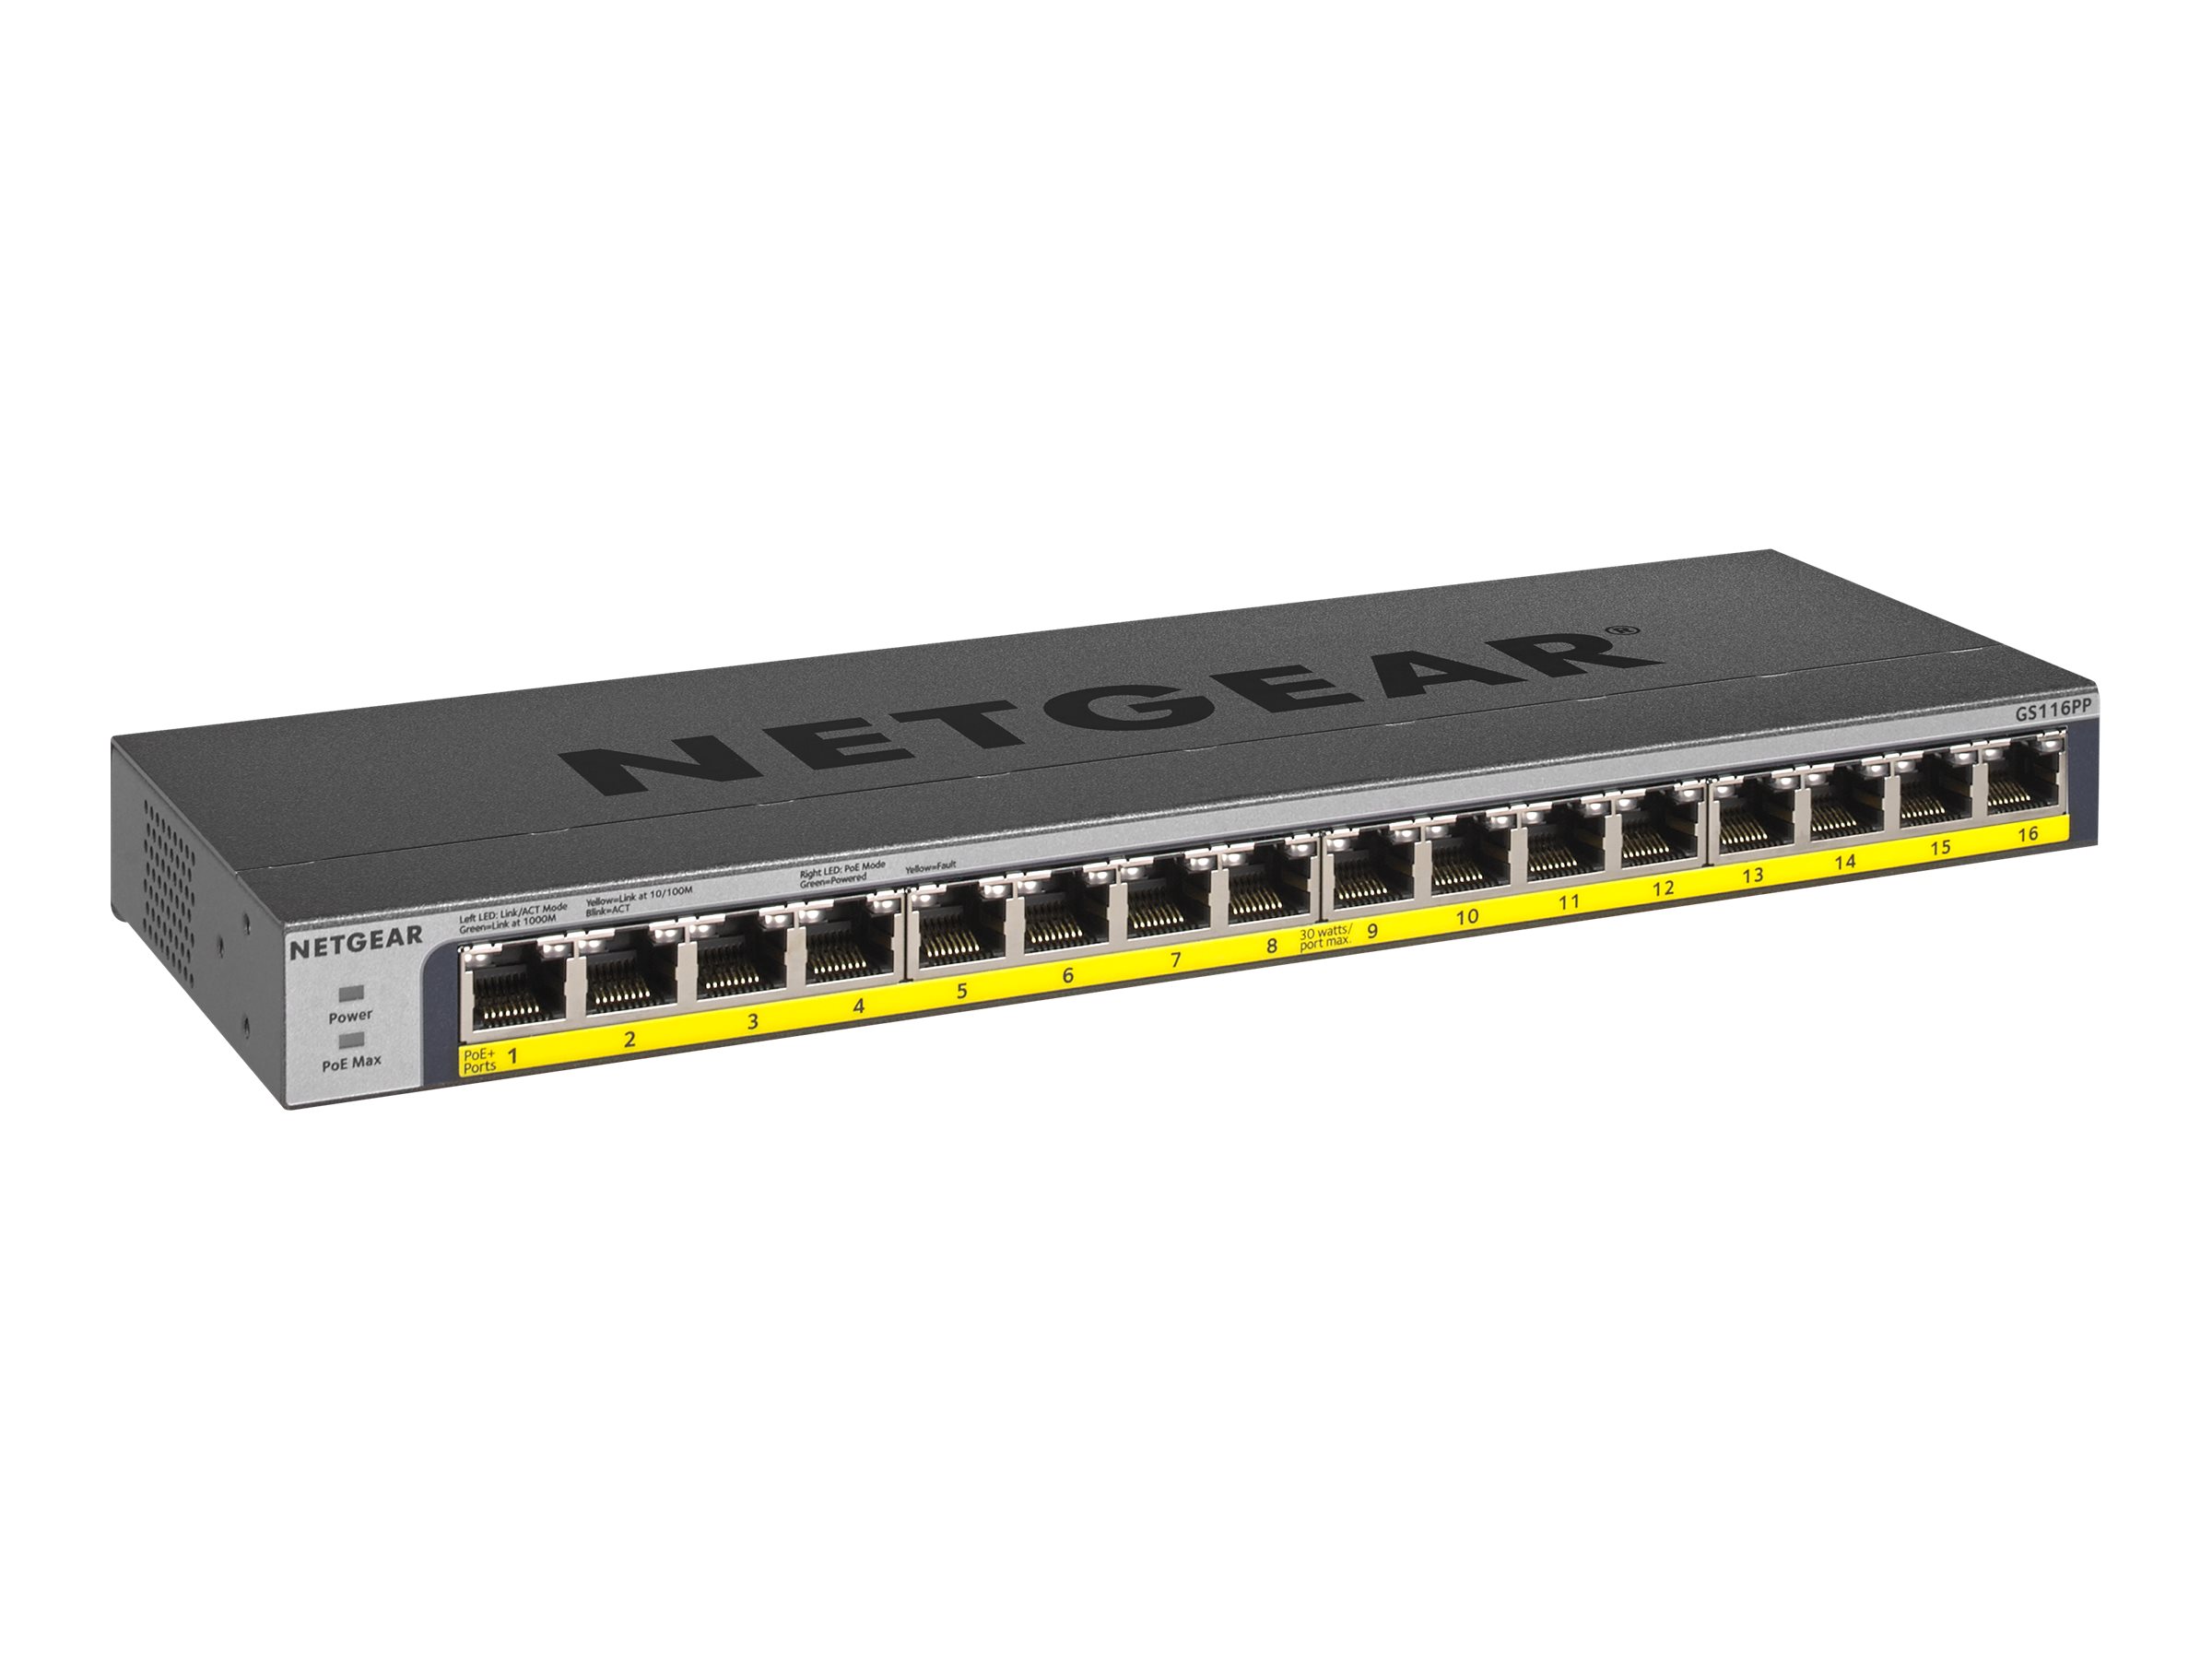 NETGEAR GS116PP – Switch